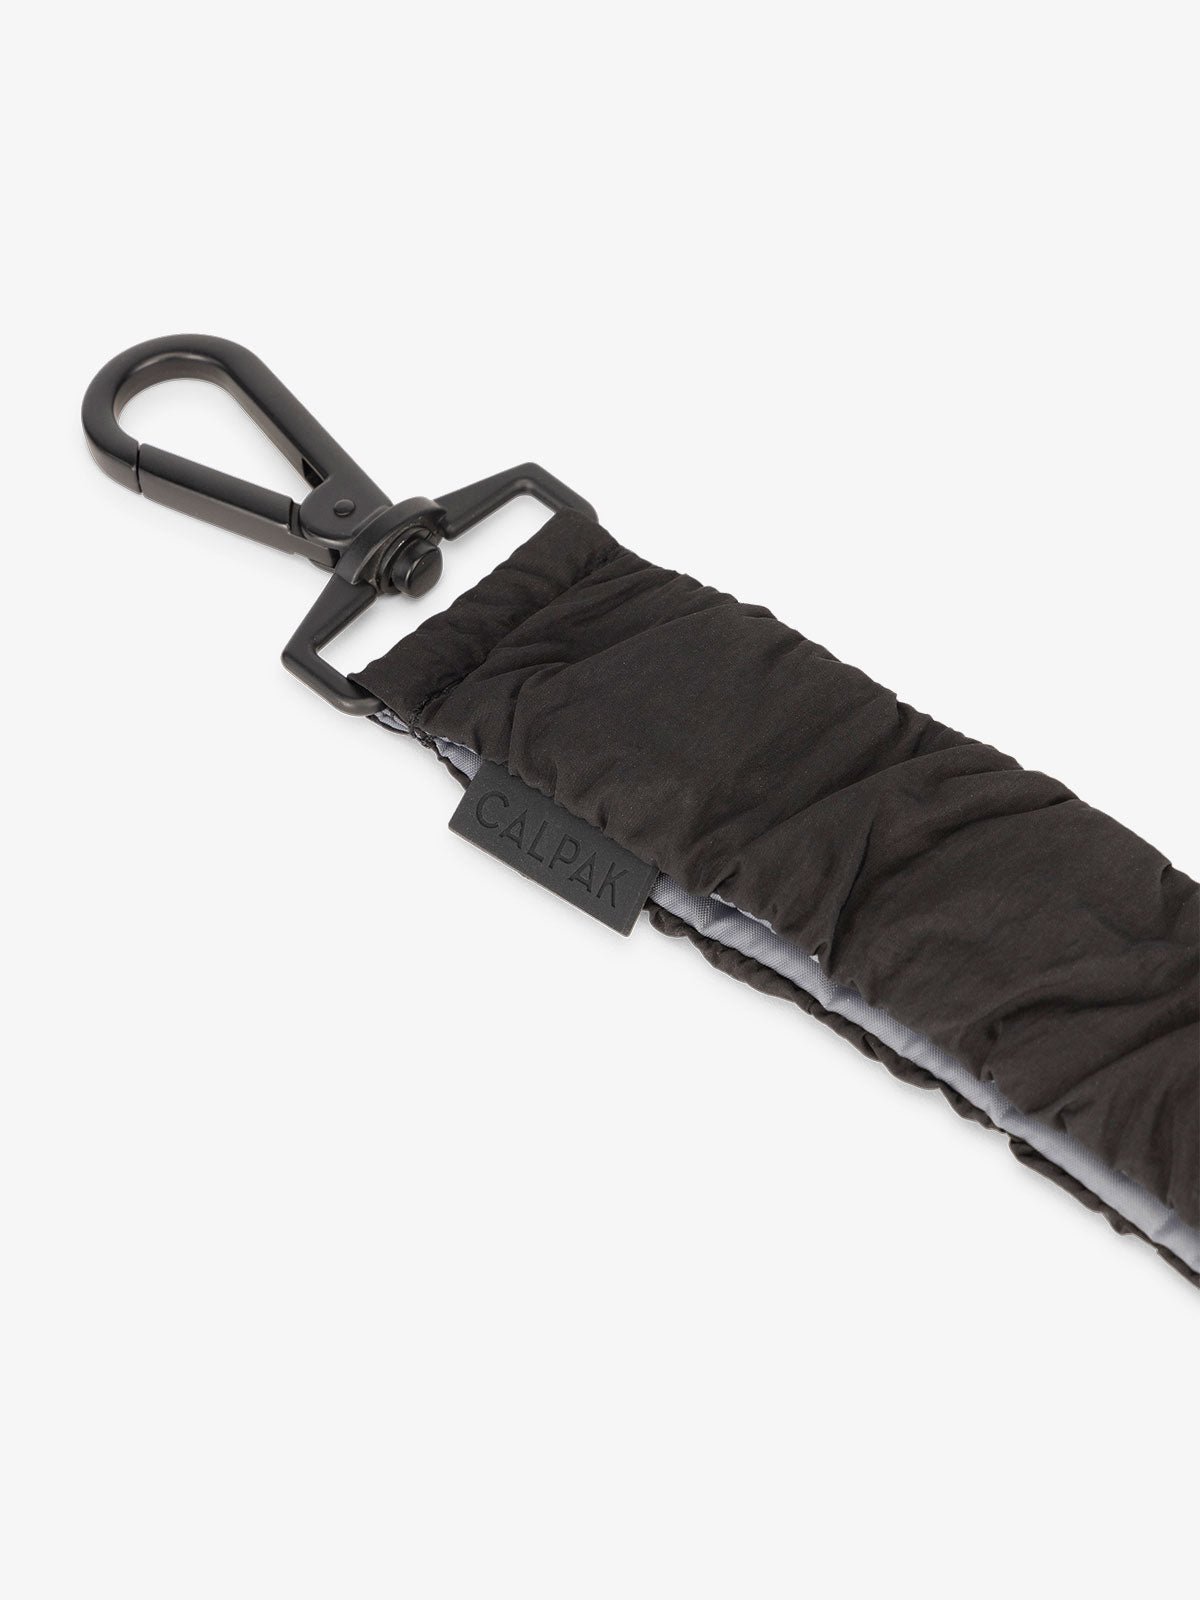 CALPAK diaper bag stroller straps with dog clips for d-rings in black